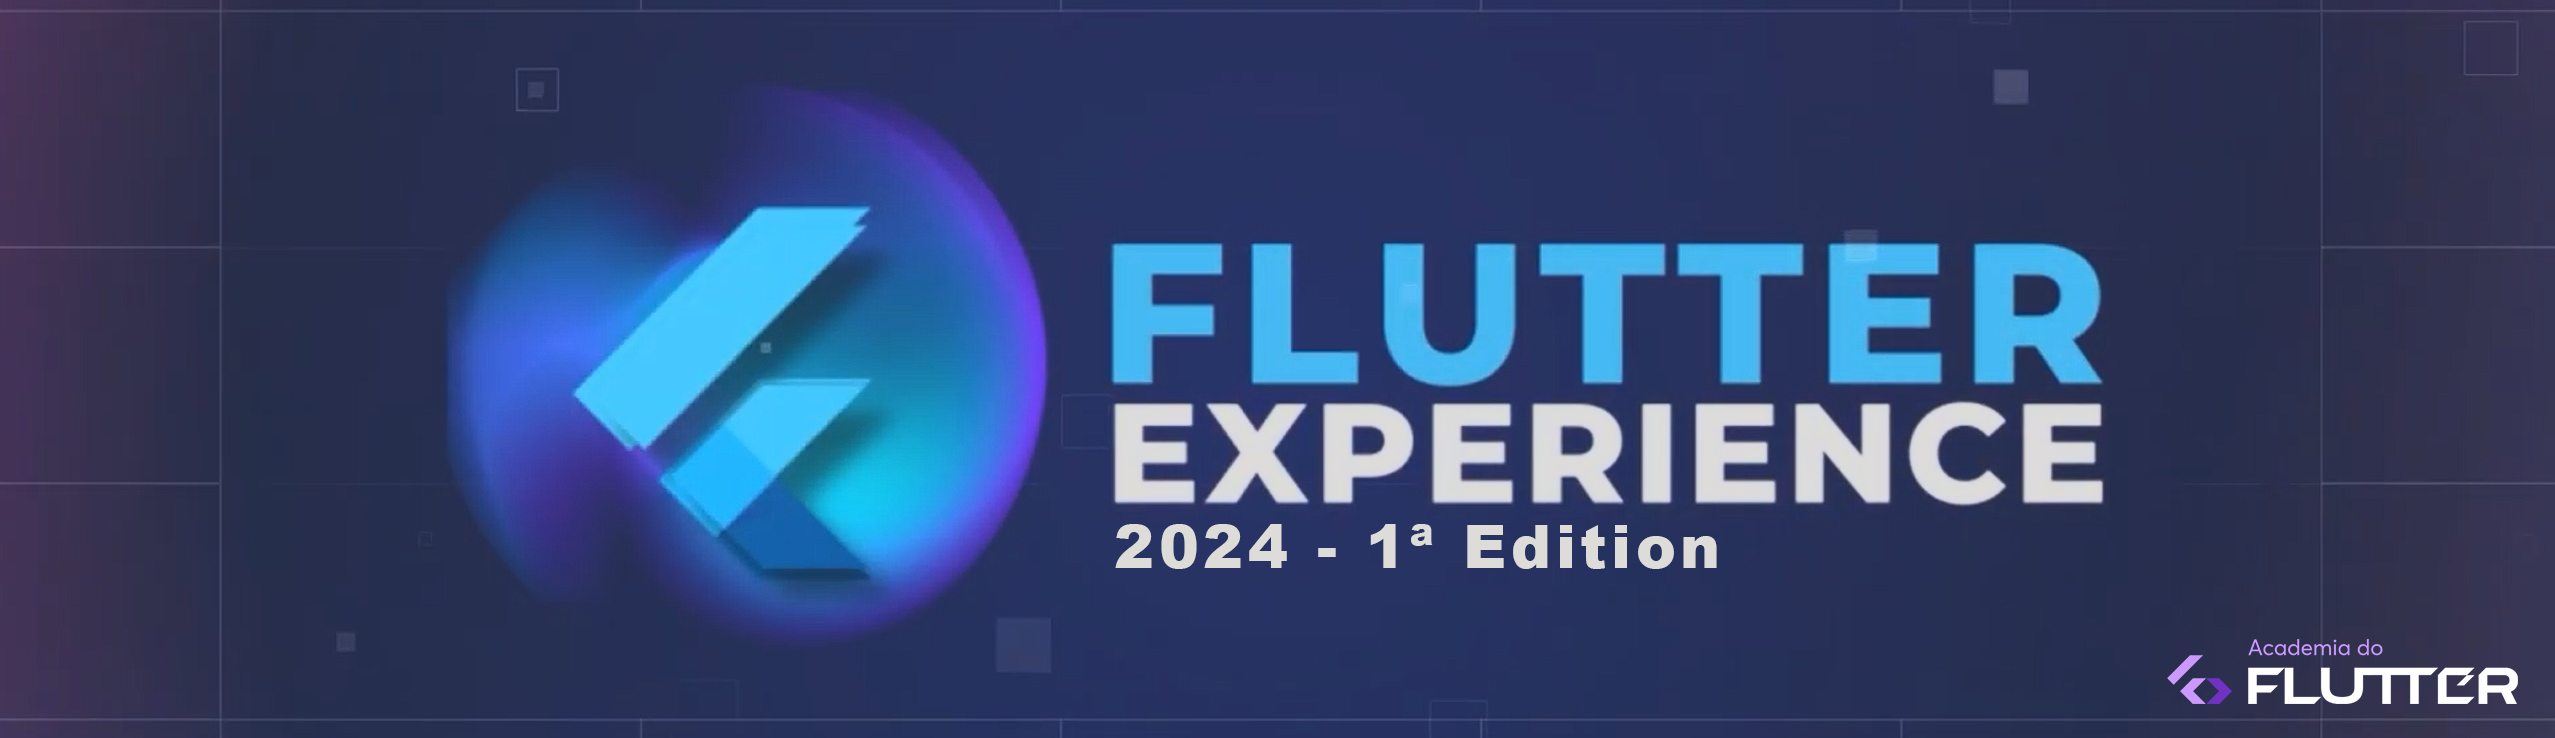 Flutter Experience - 2024 - 1º Edition